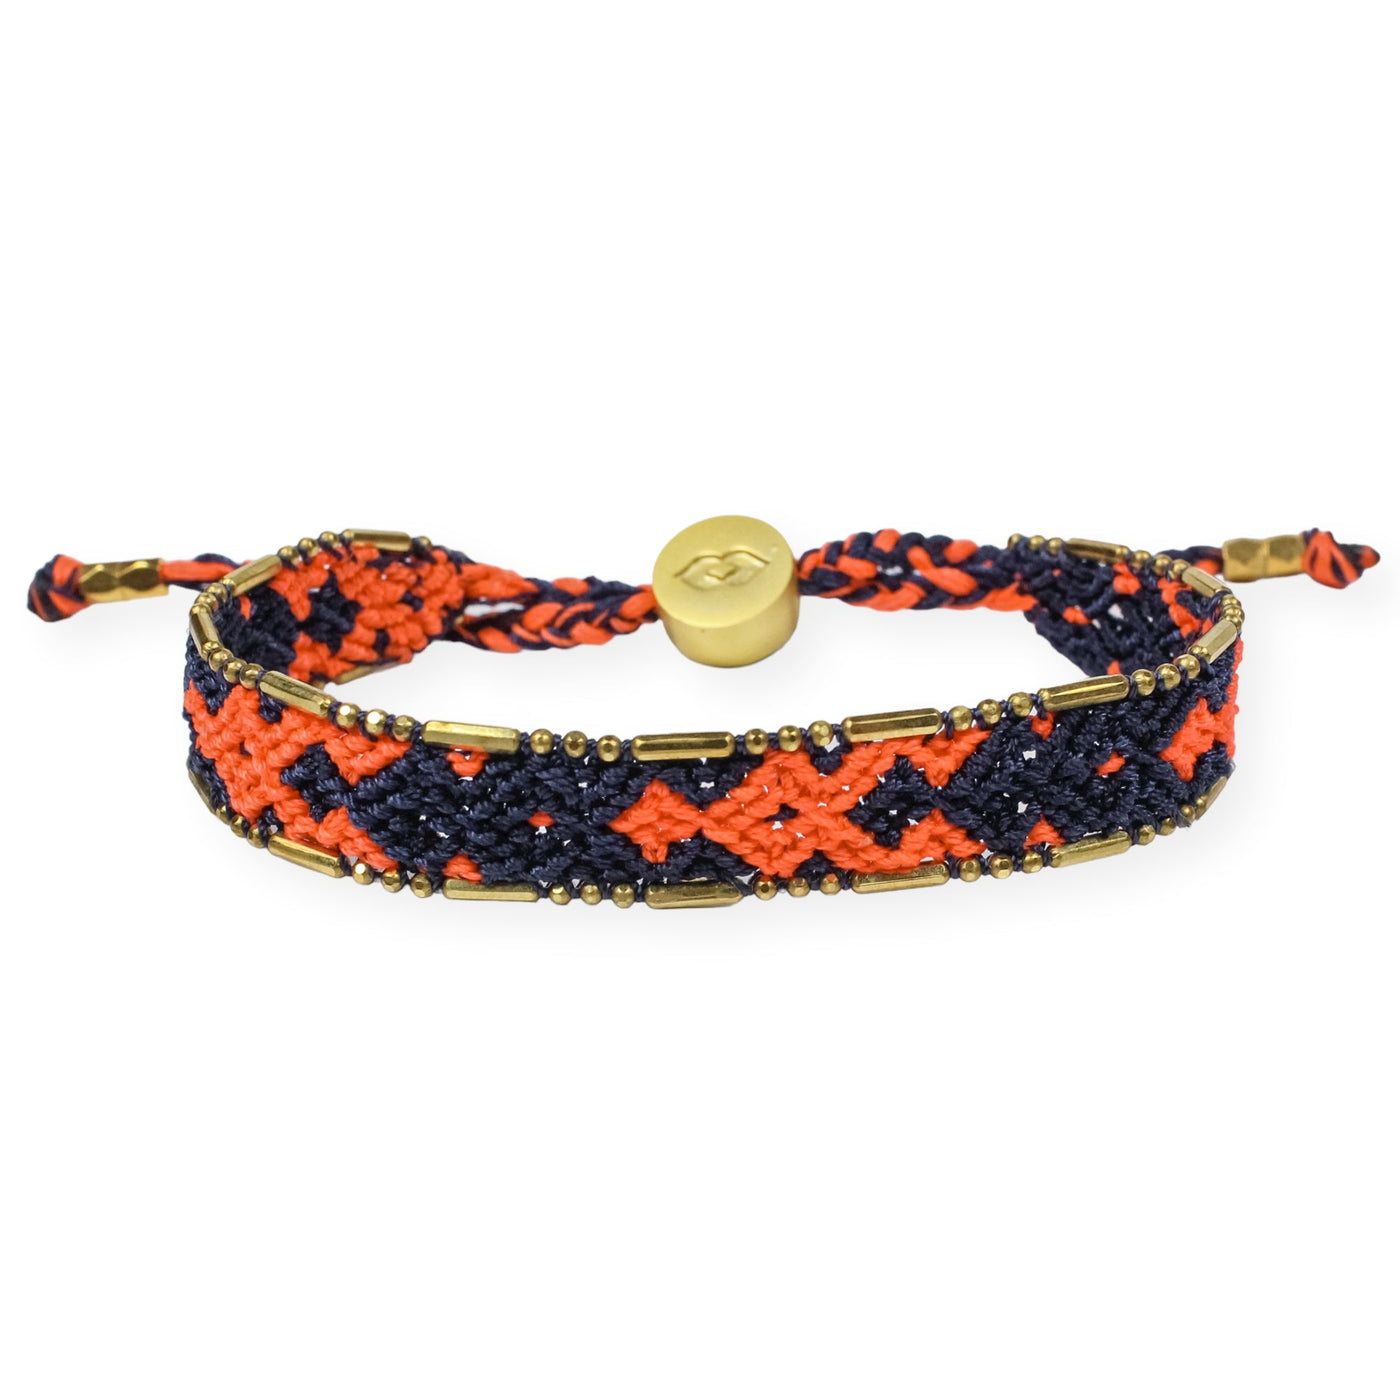 Bali Friendship Bracelet - Navy and Orange